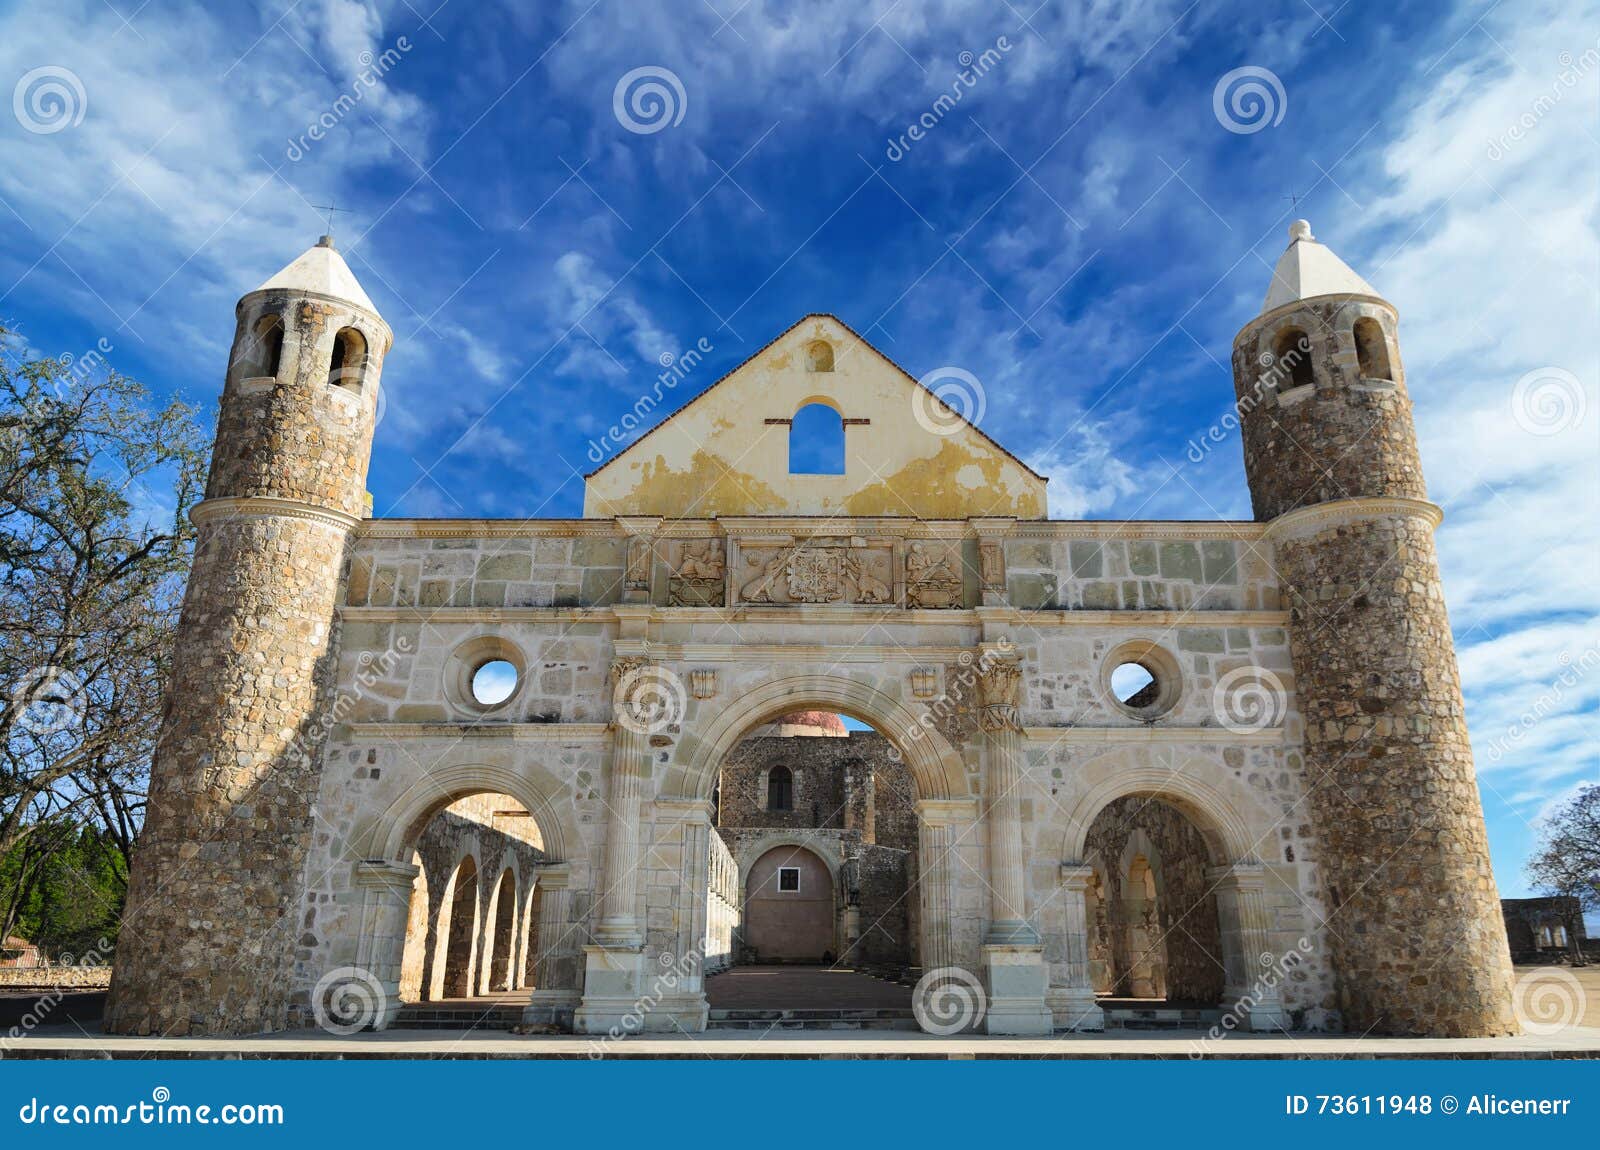 stunning convento de cuilapam in oaxaca